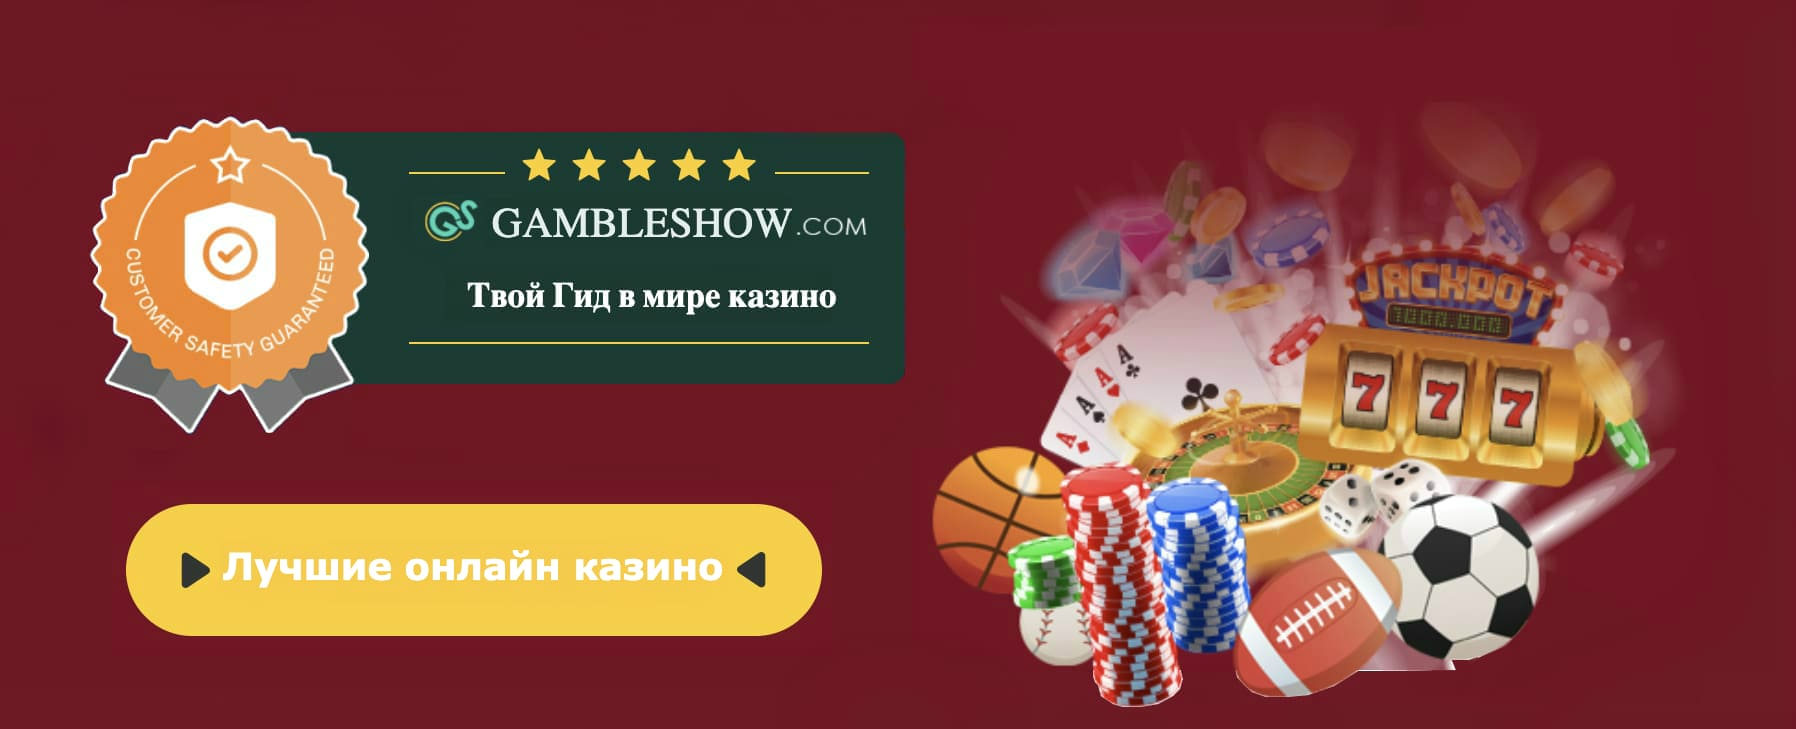 Casino slot machine revenue